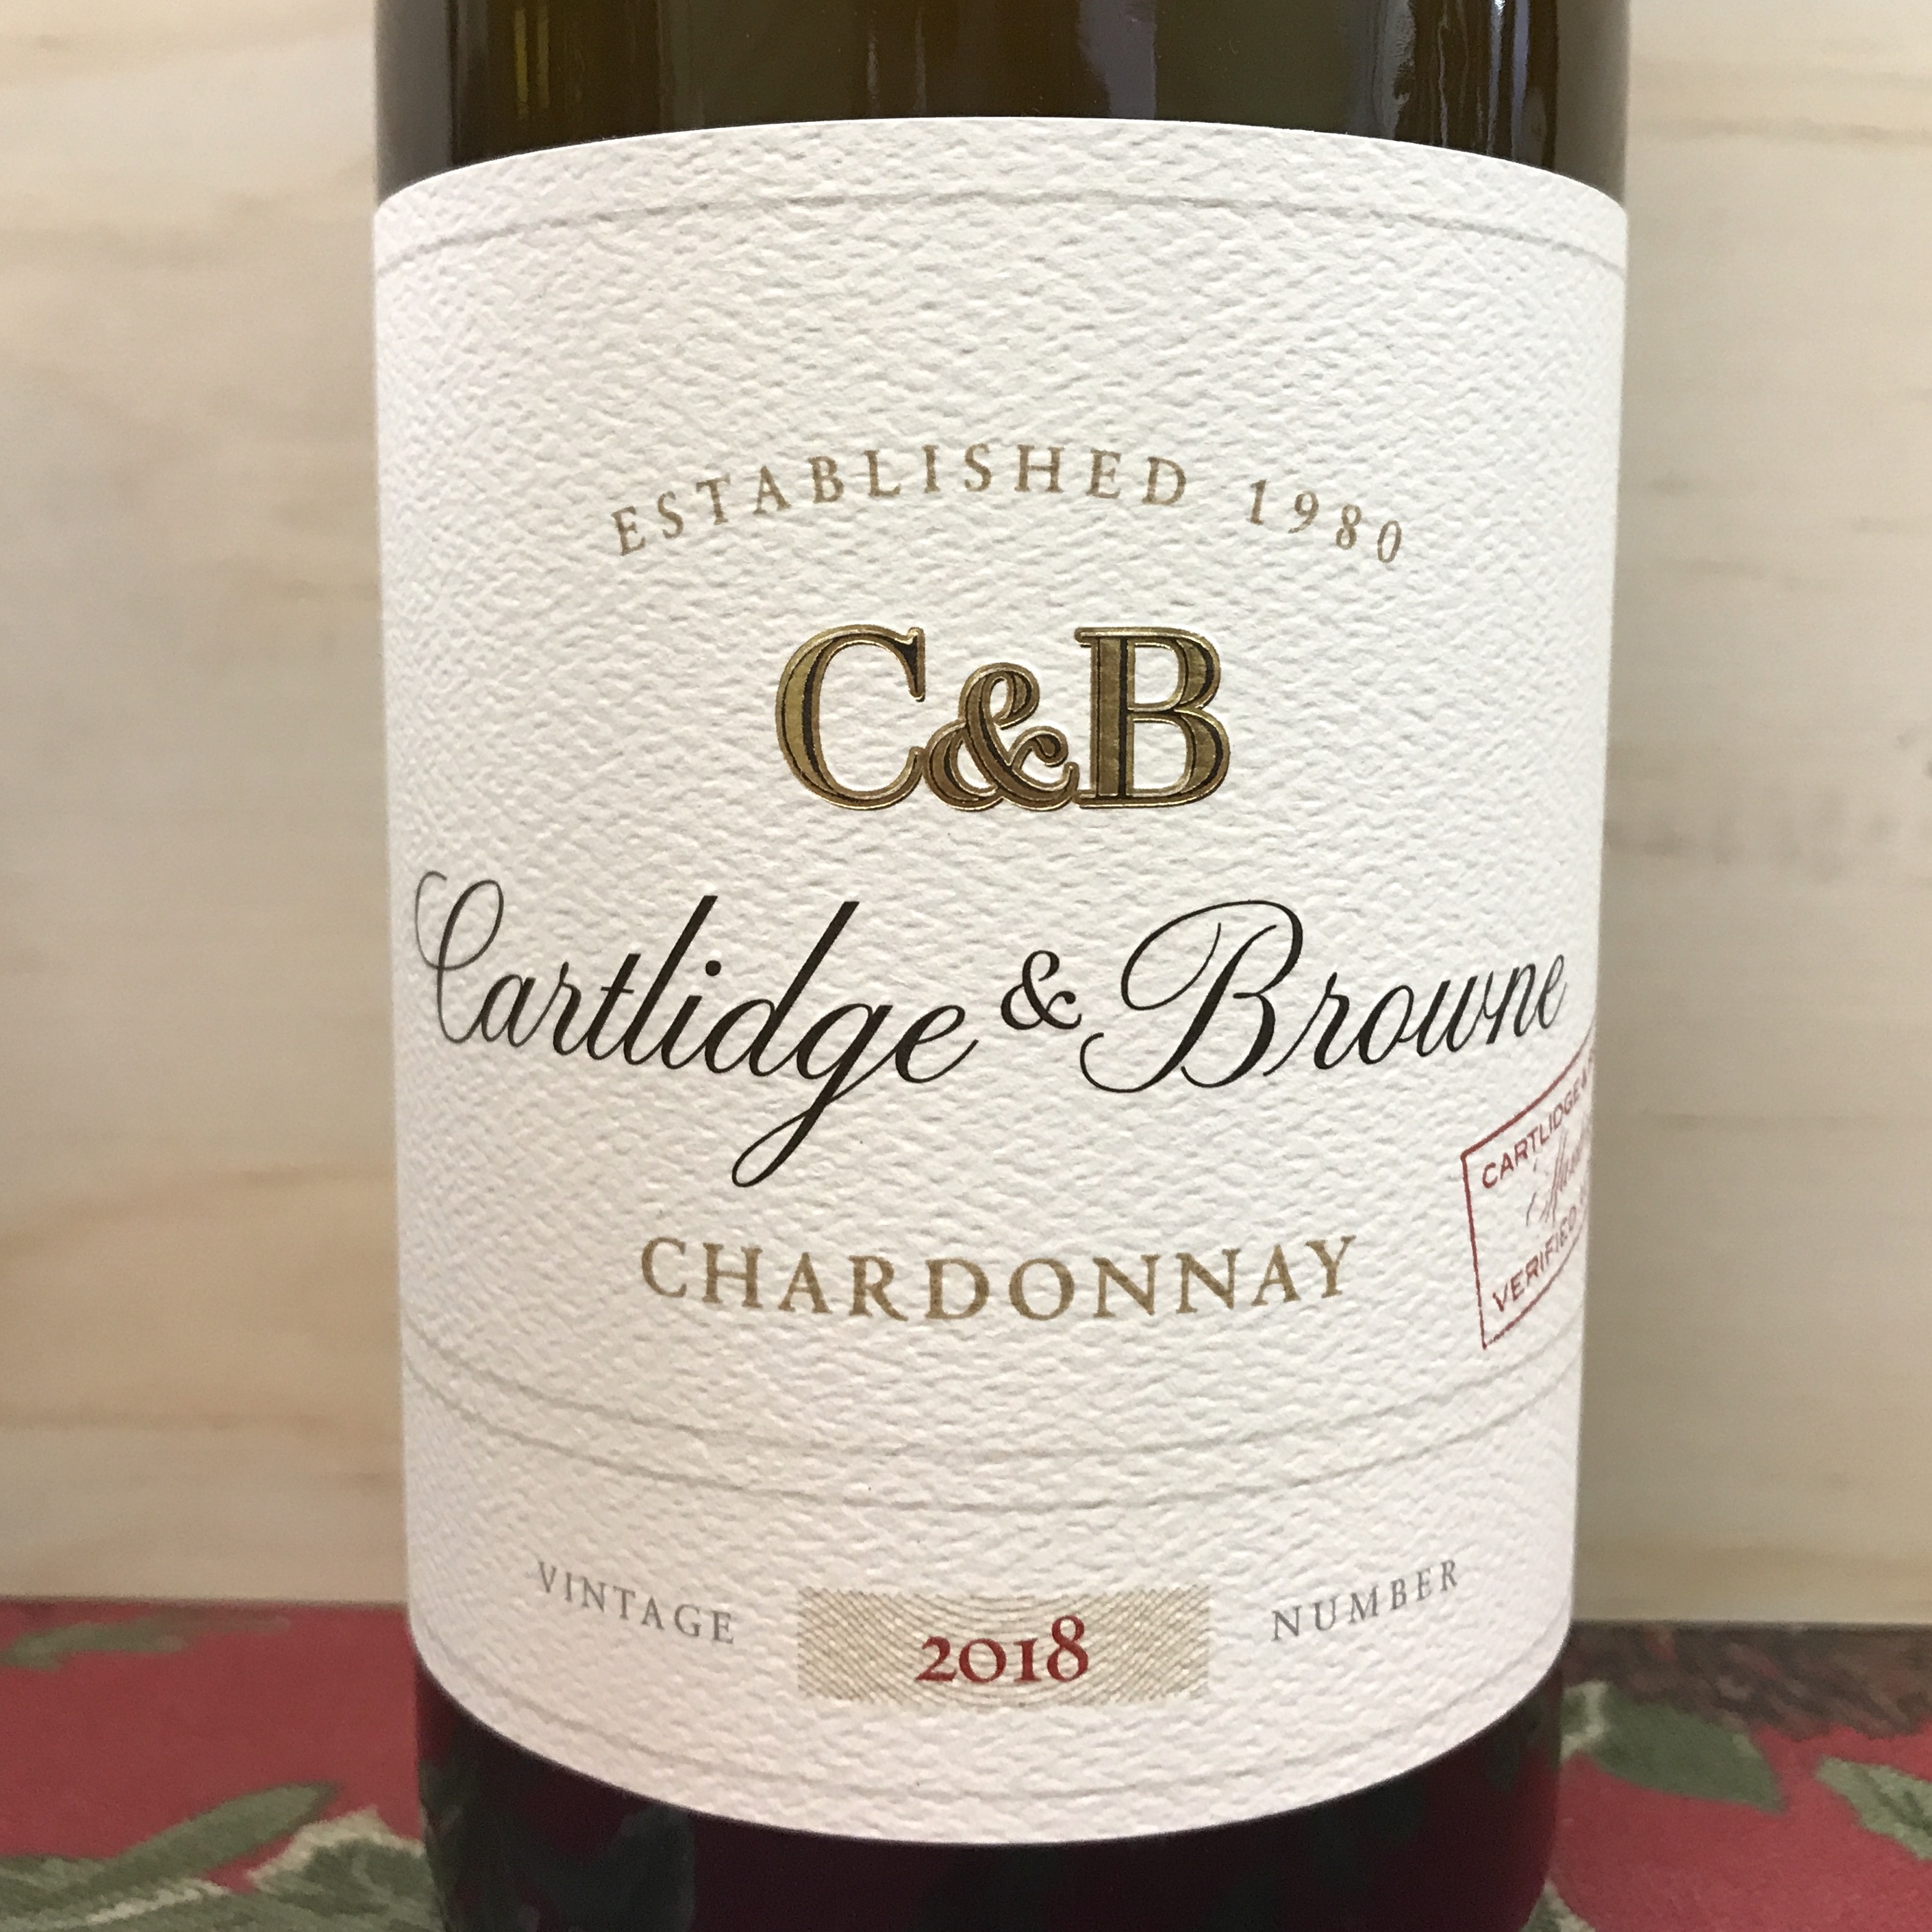 Cartlidge & Brown Chardonnay 2018